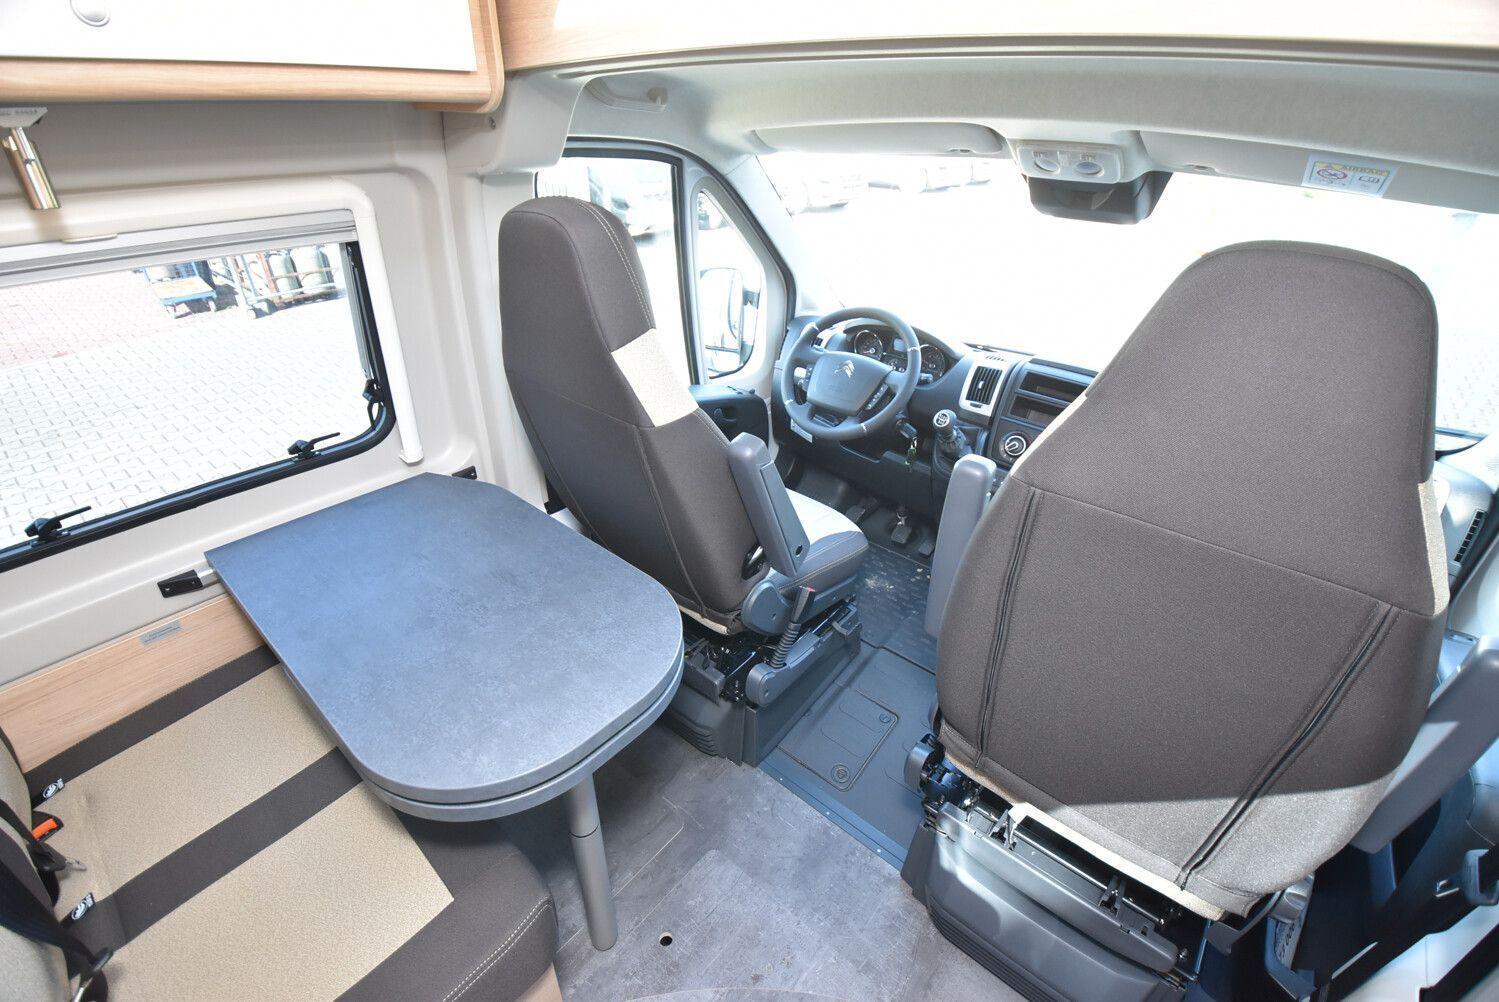 Wohnmobil 🚐 Roadcar R 600 Citroen 140 PS kaufen